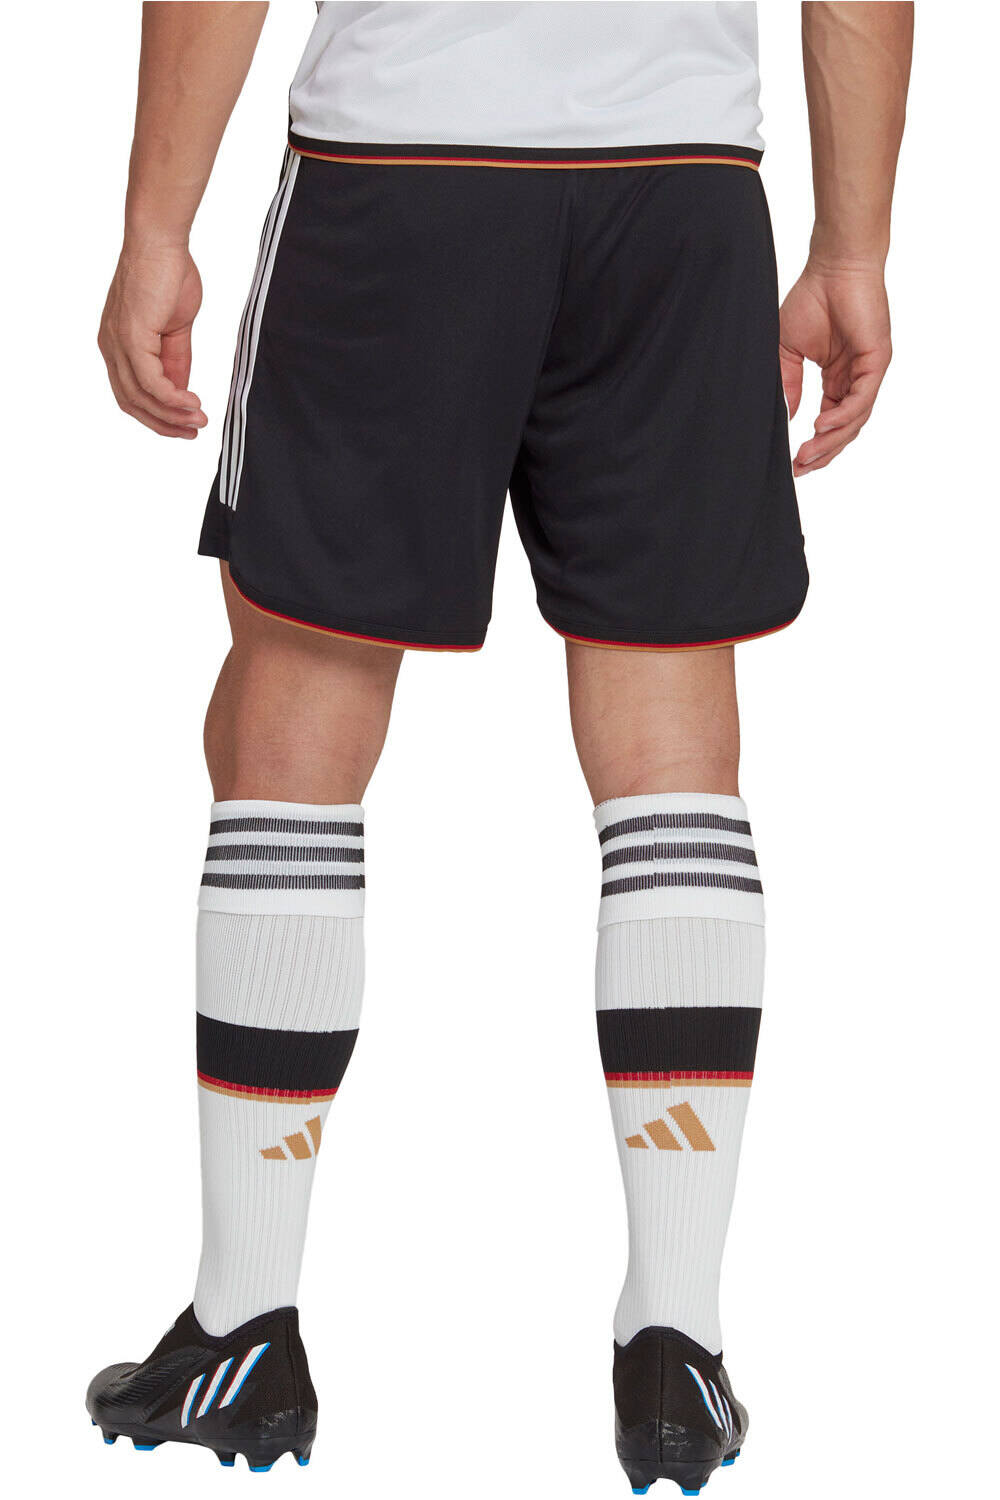 adidas pantalones fútbol oficiales Germany 22 Home vista trasera